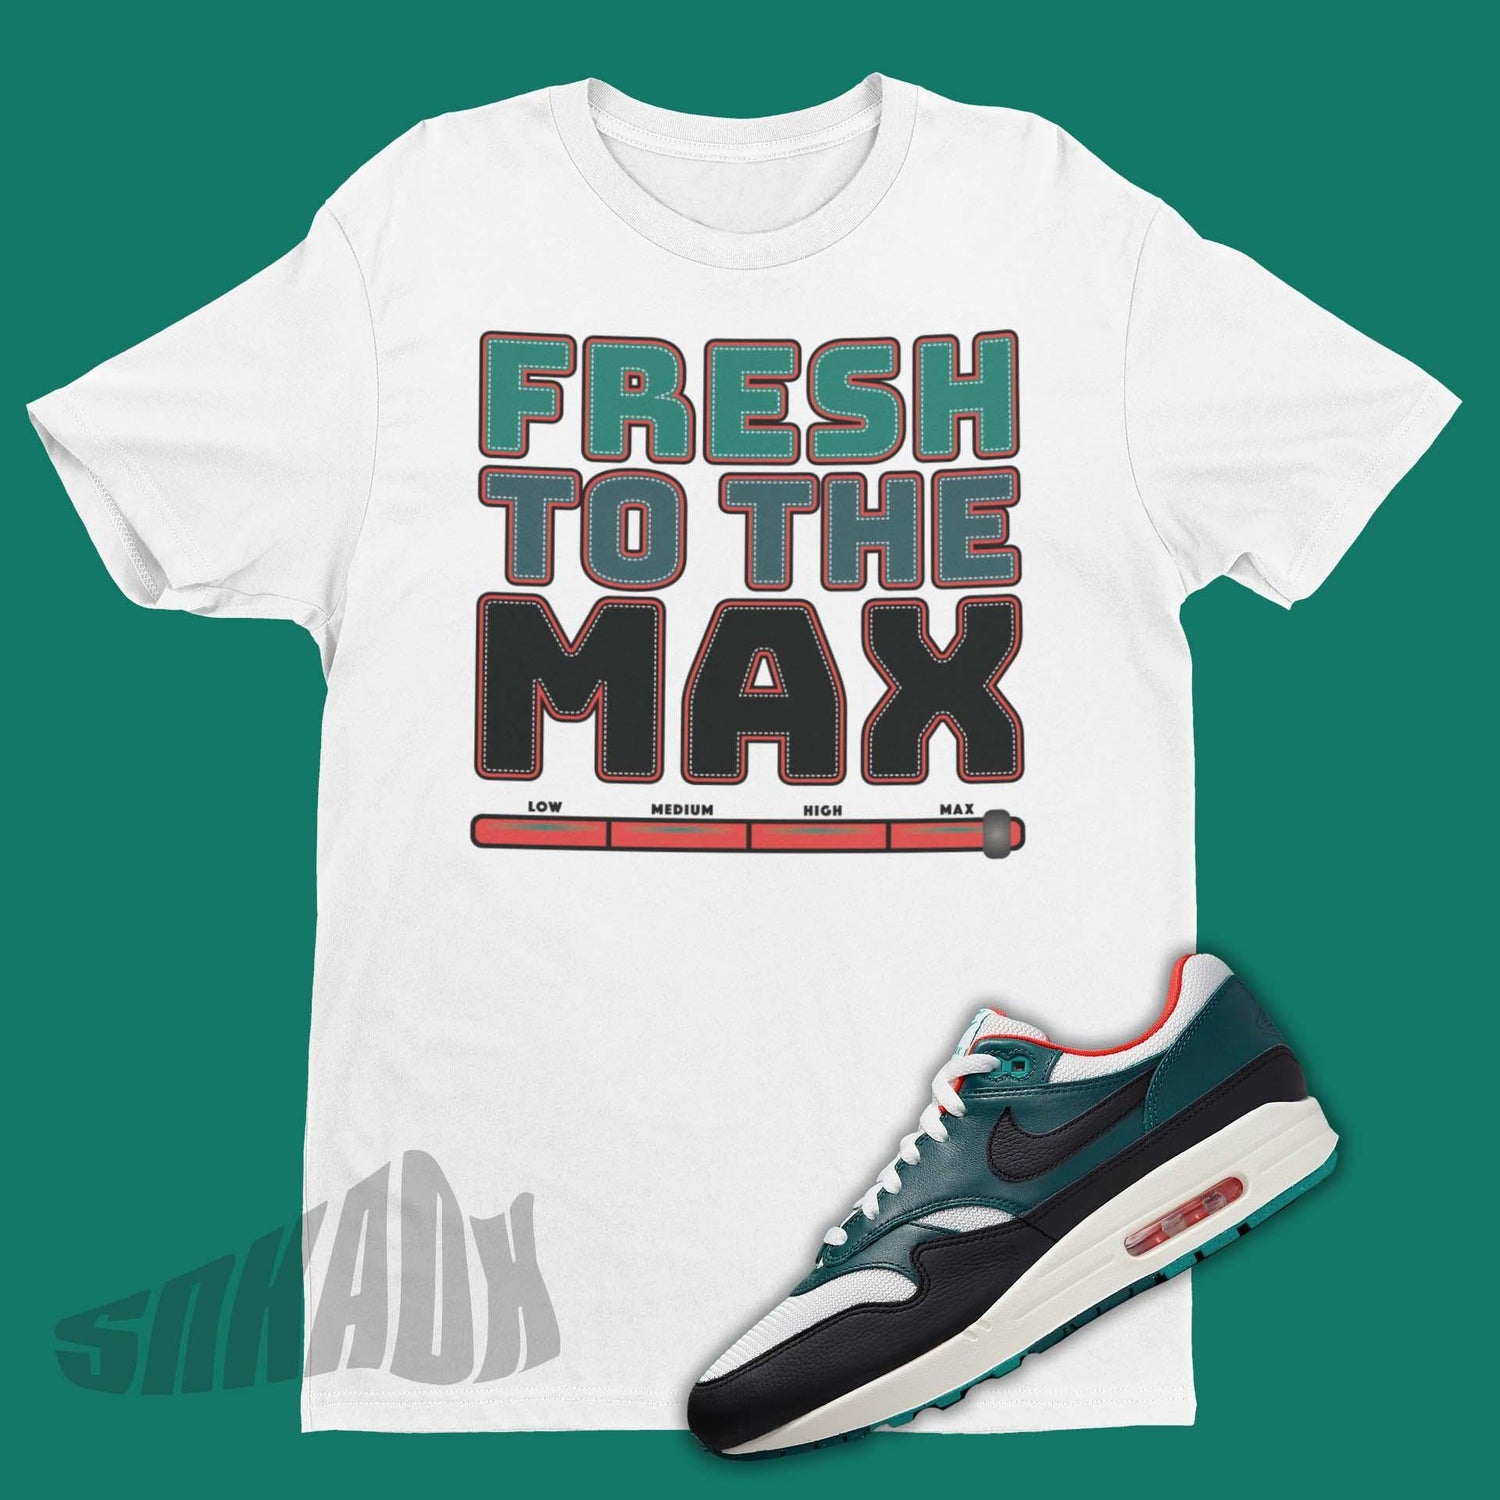 Lebron James x Nike Air Max 1 Liverpool matching shirt